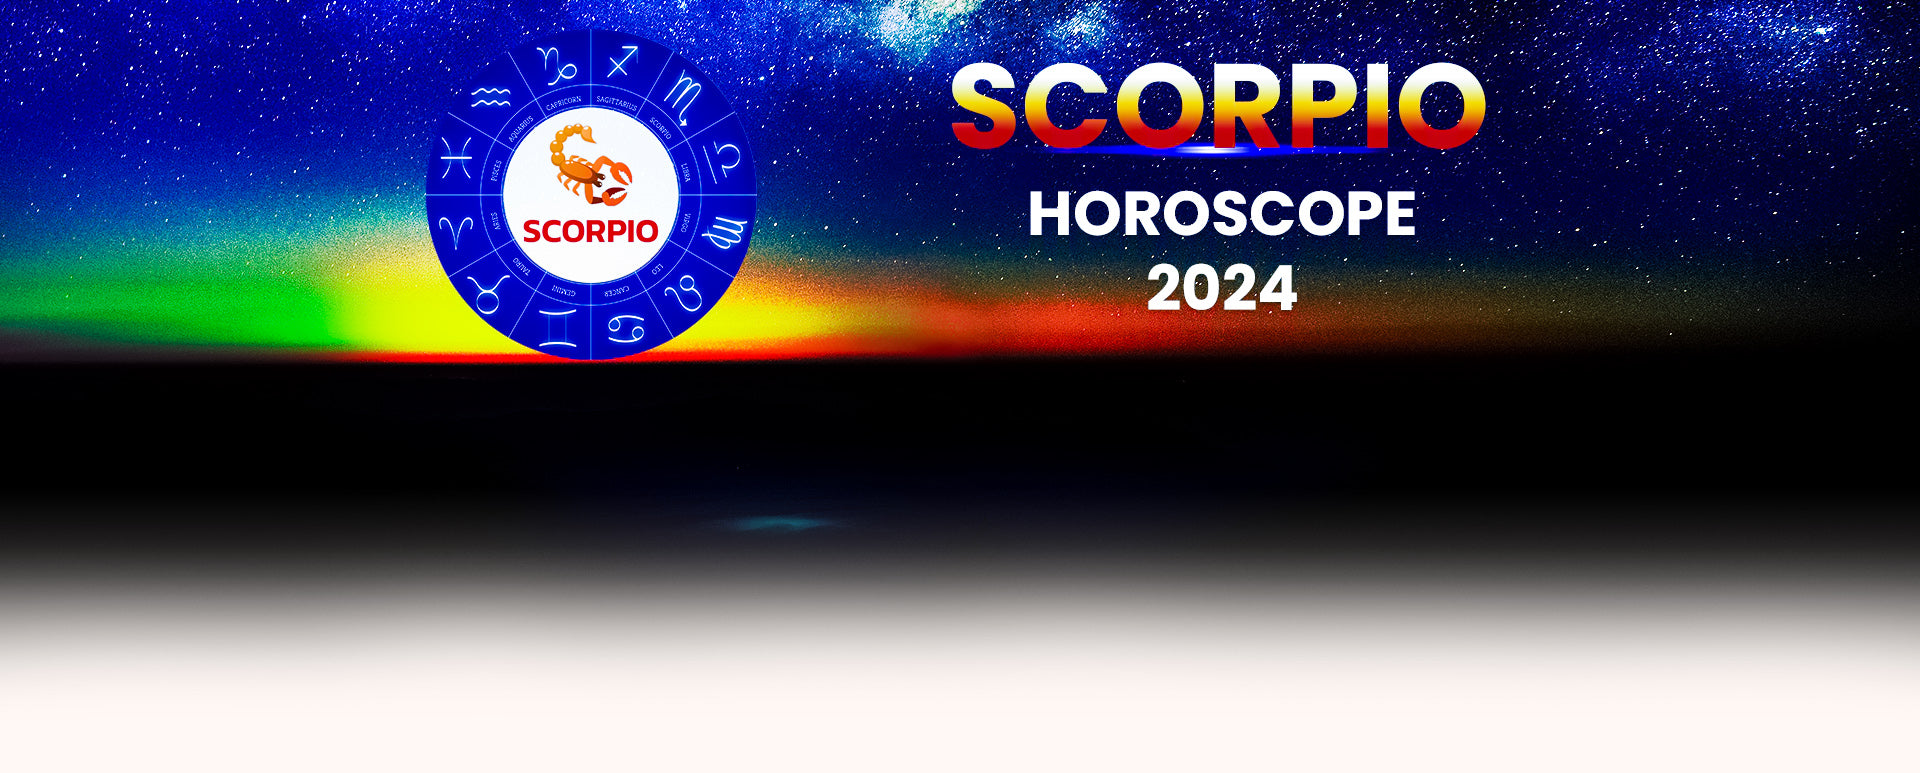 horoscope 2024 pisces tagalog